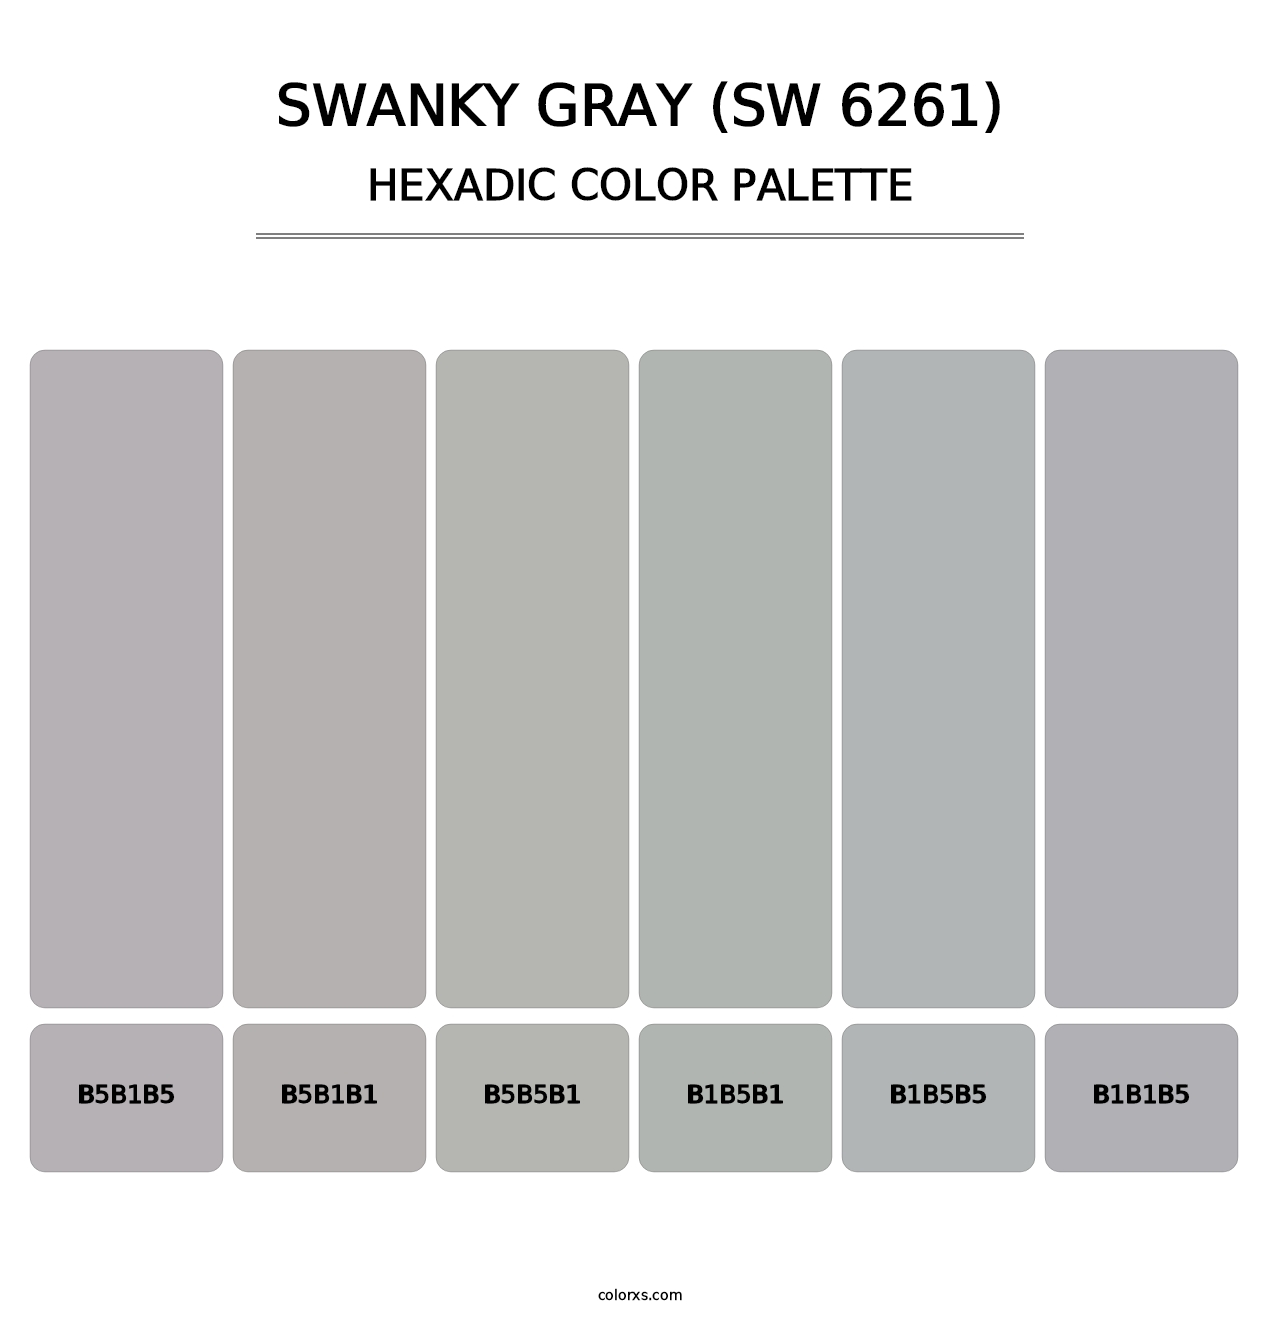 Swanky Gray (SW 6261) - Hexadic Color Palette